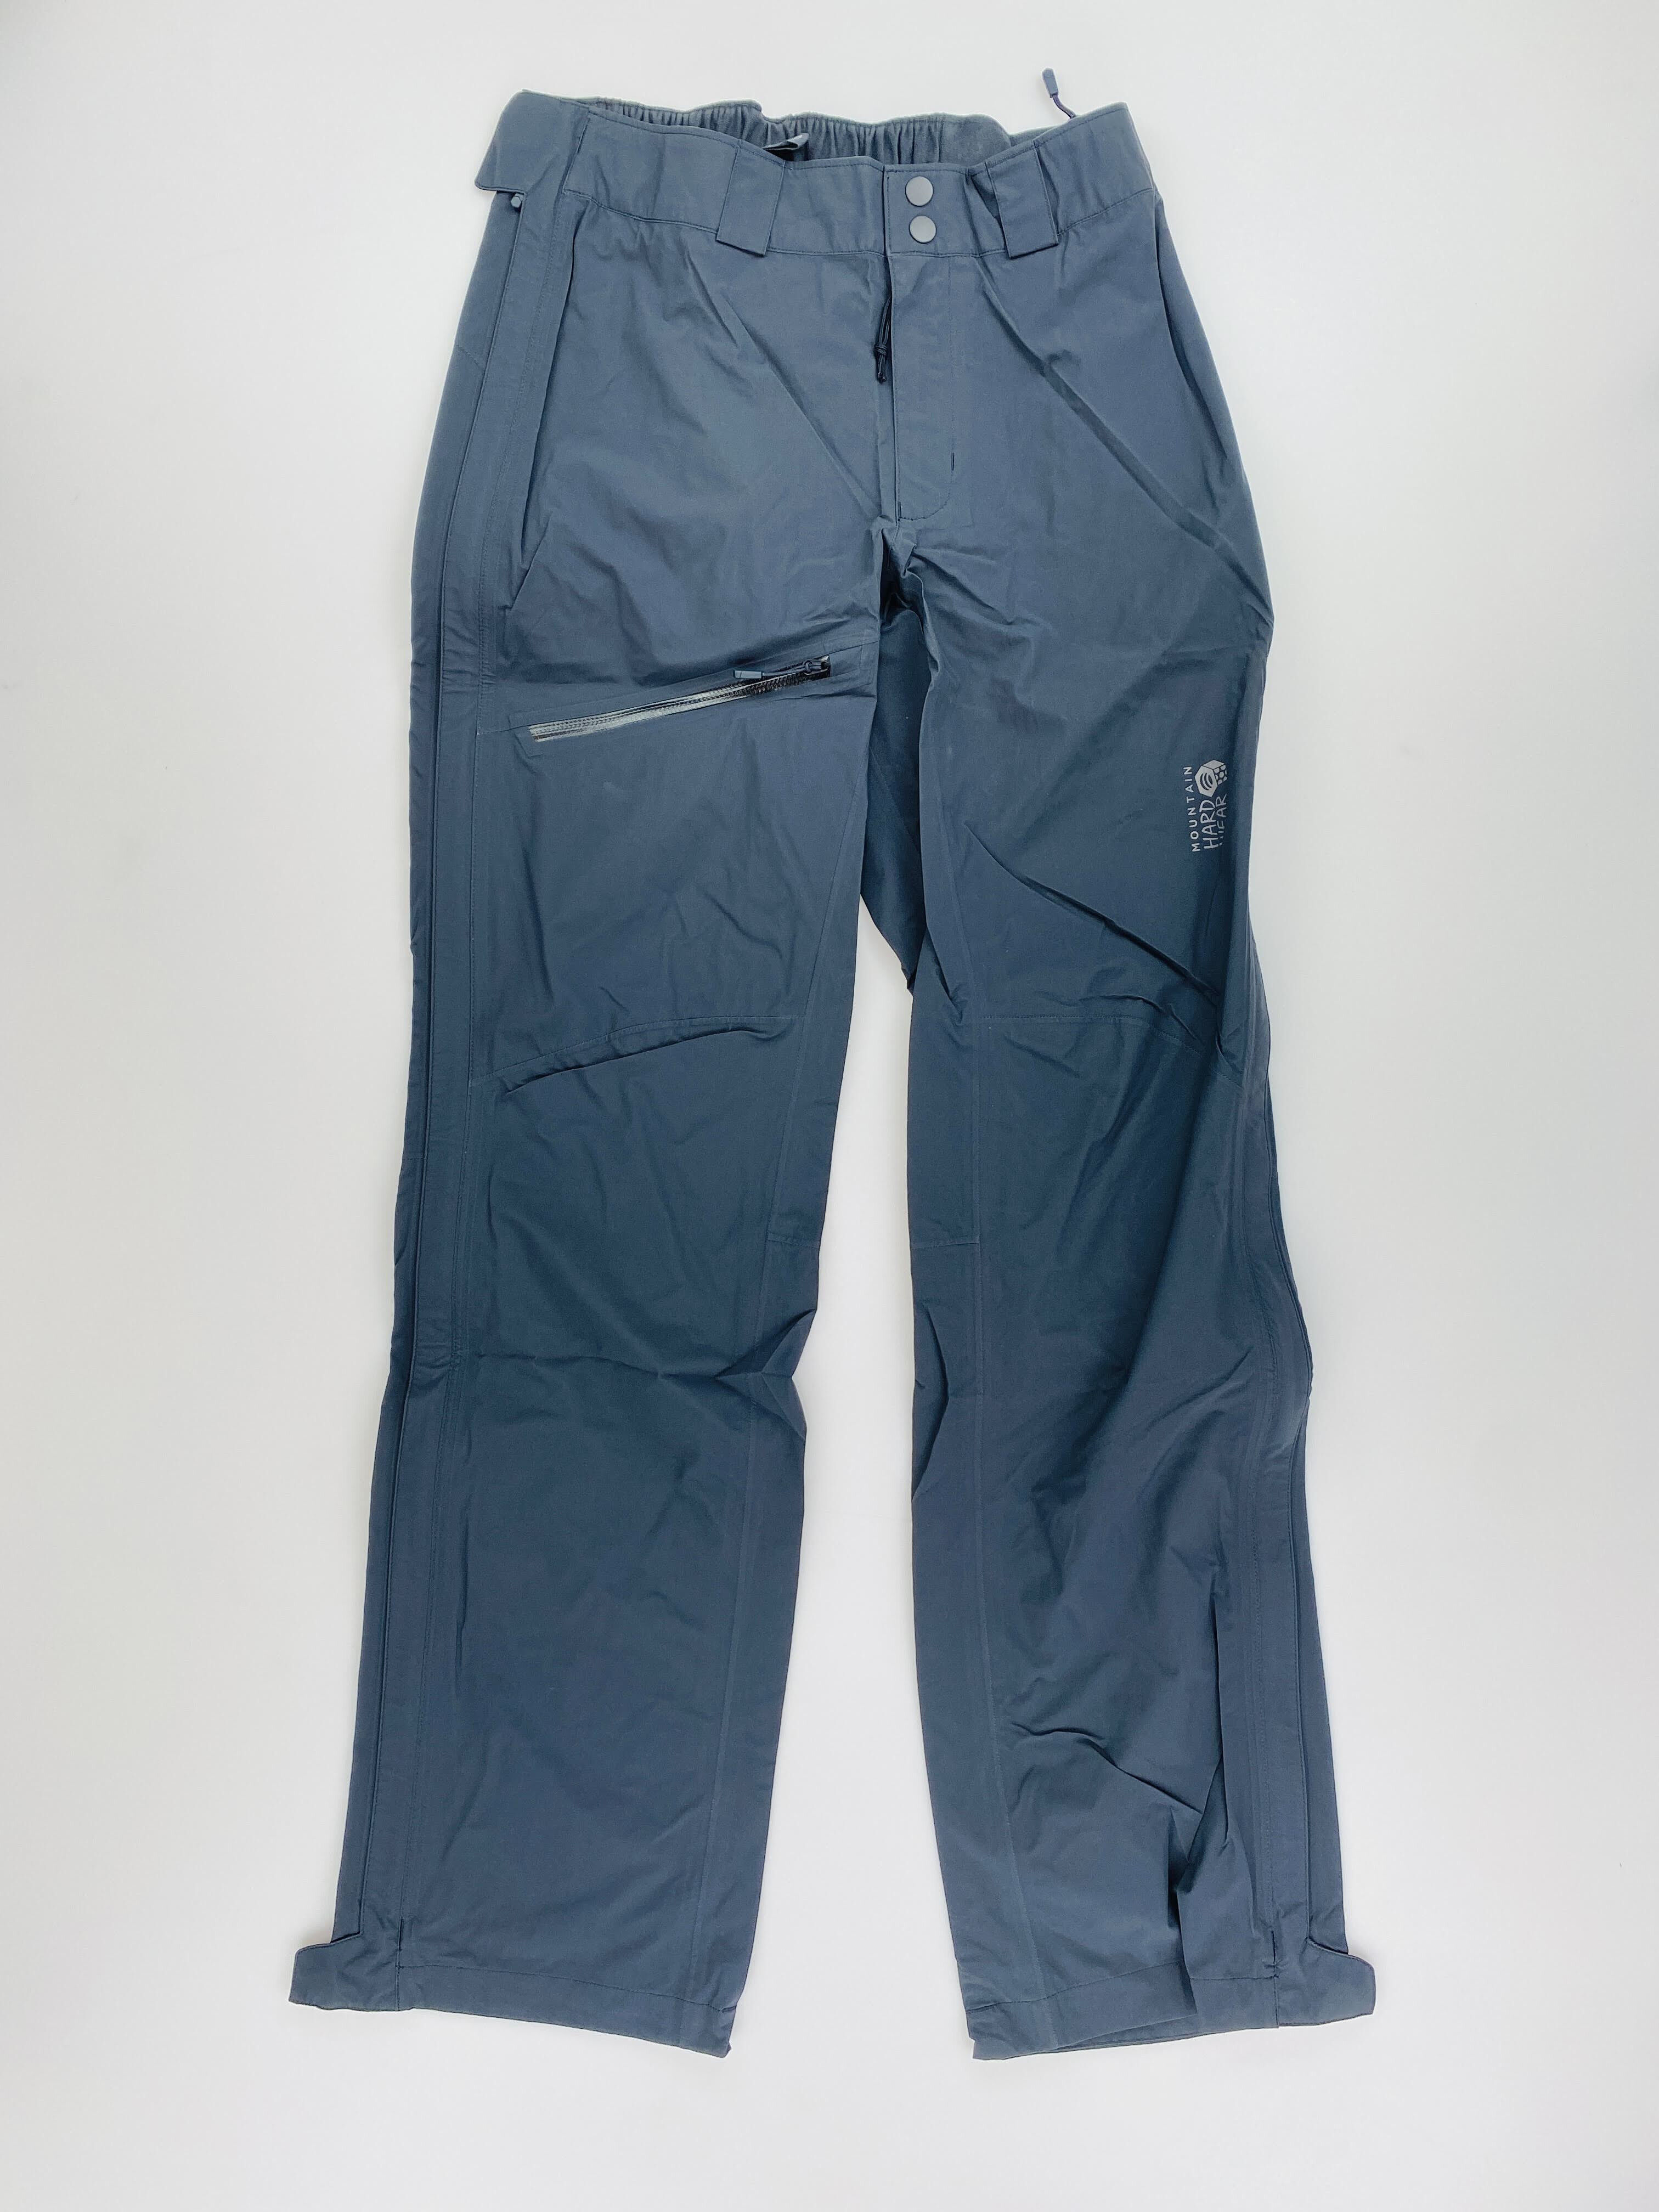 Pantalones Senderismo Mujer - Tsenda Pant W - Blue/Black